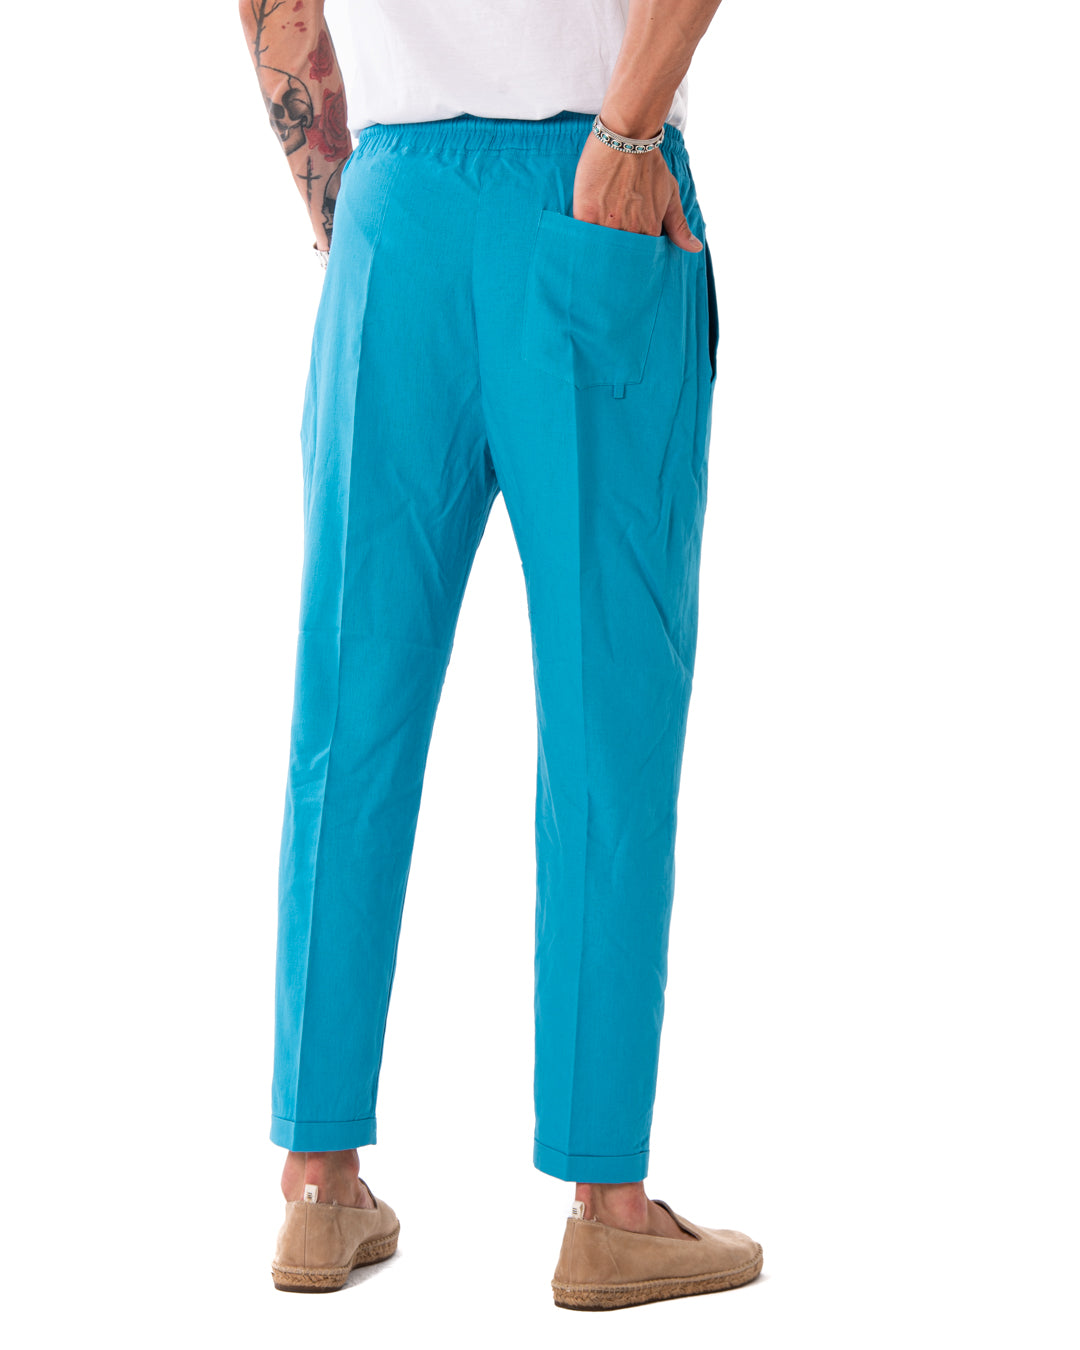 Larry - pantalon en lin turquoise